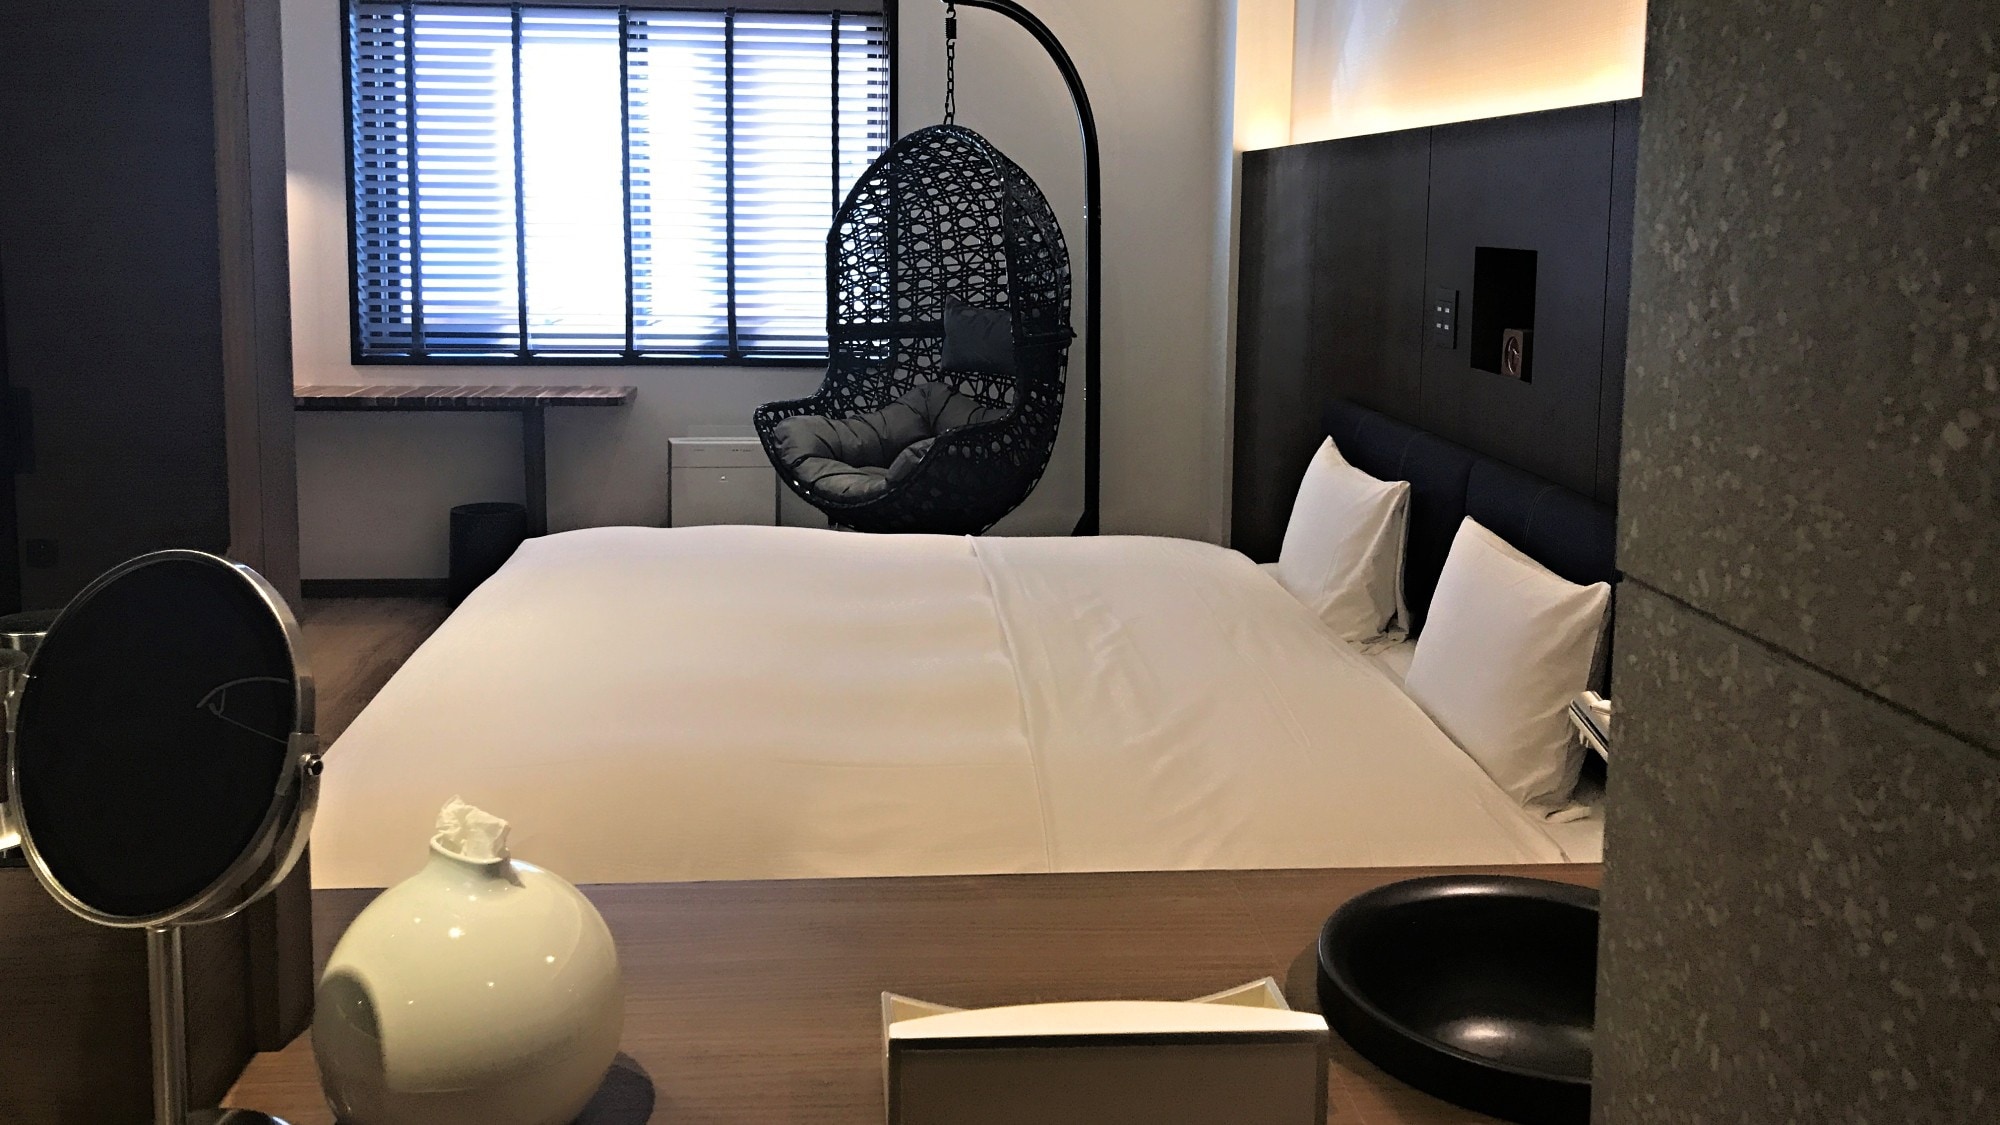 Kamar Double / King size bed dan kursi gantung dipasang di kamar (contoh kamar tamu)